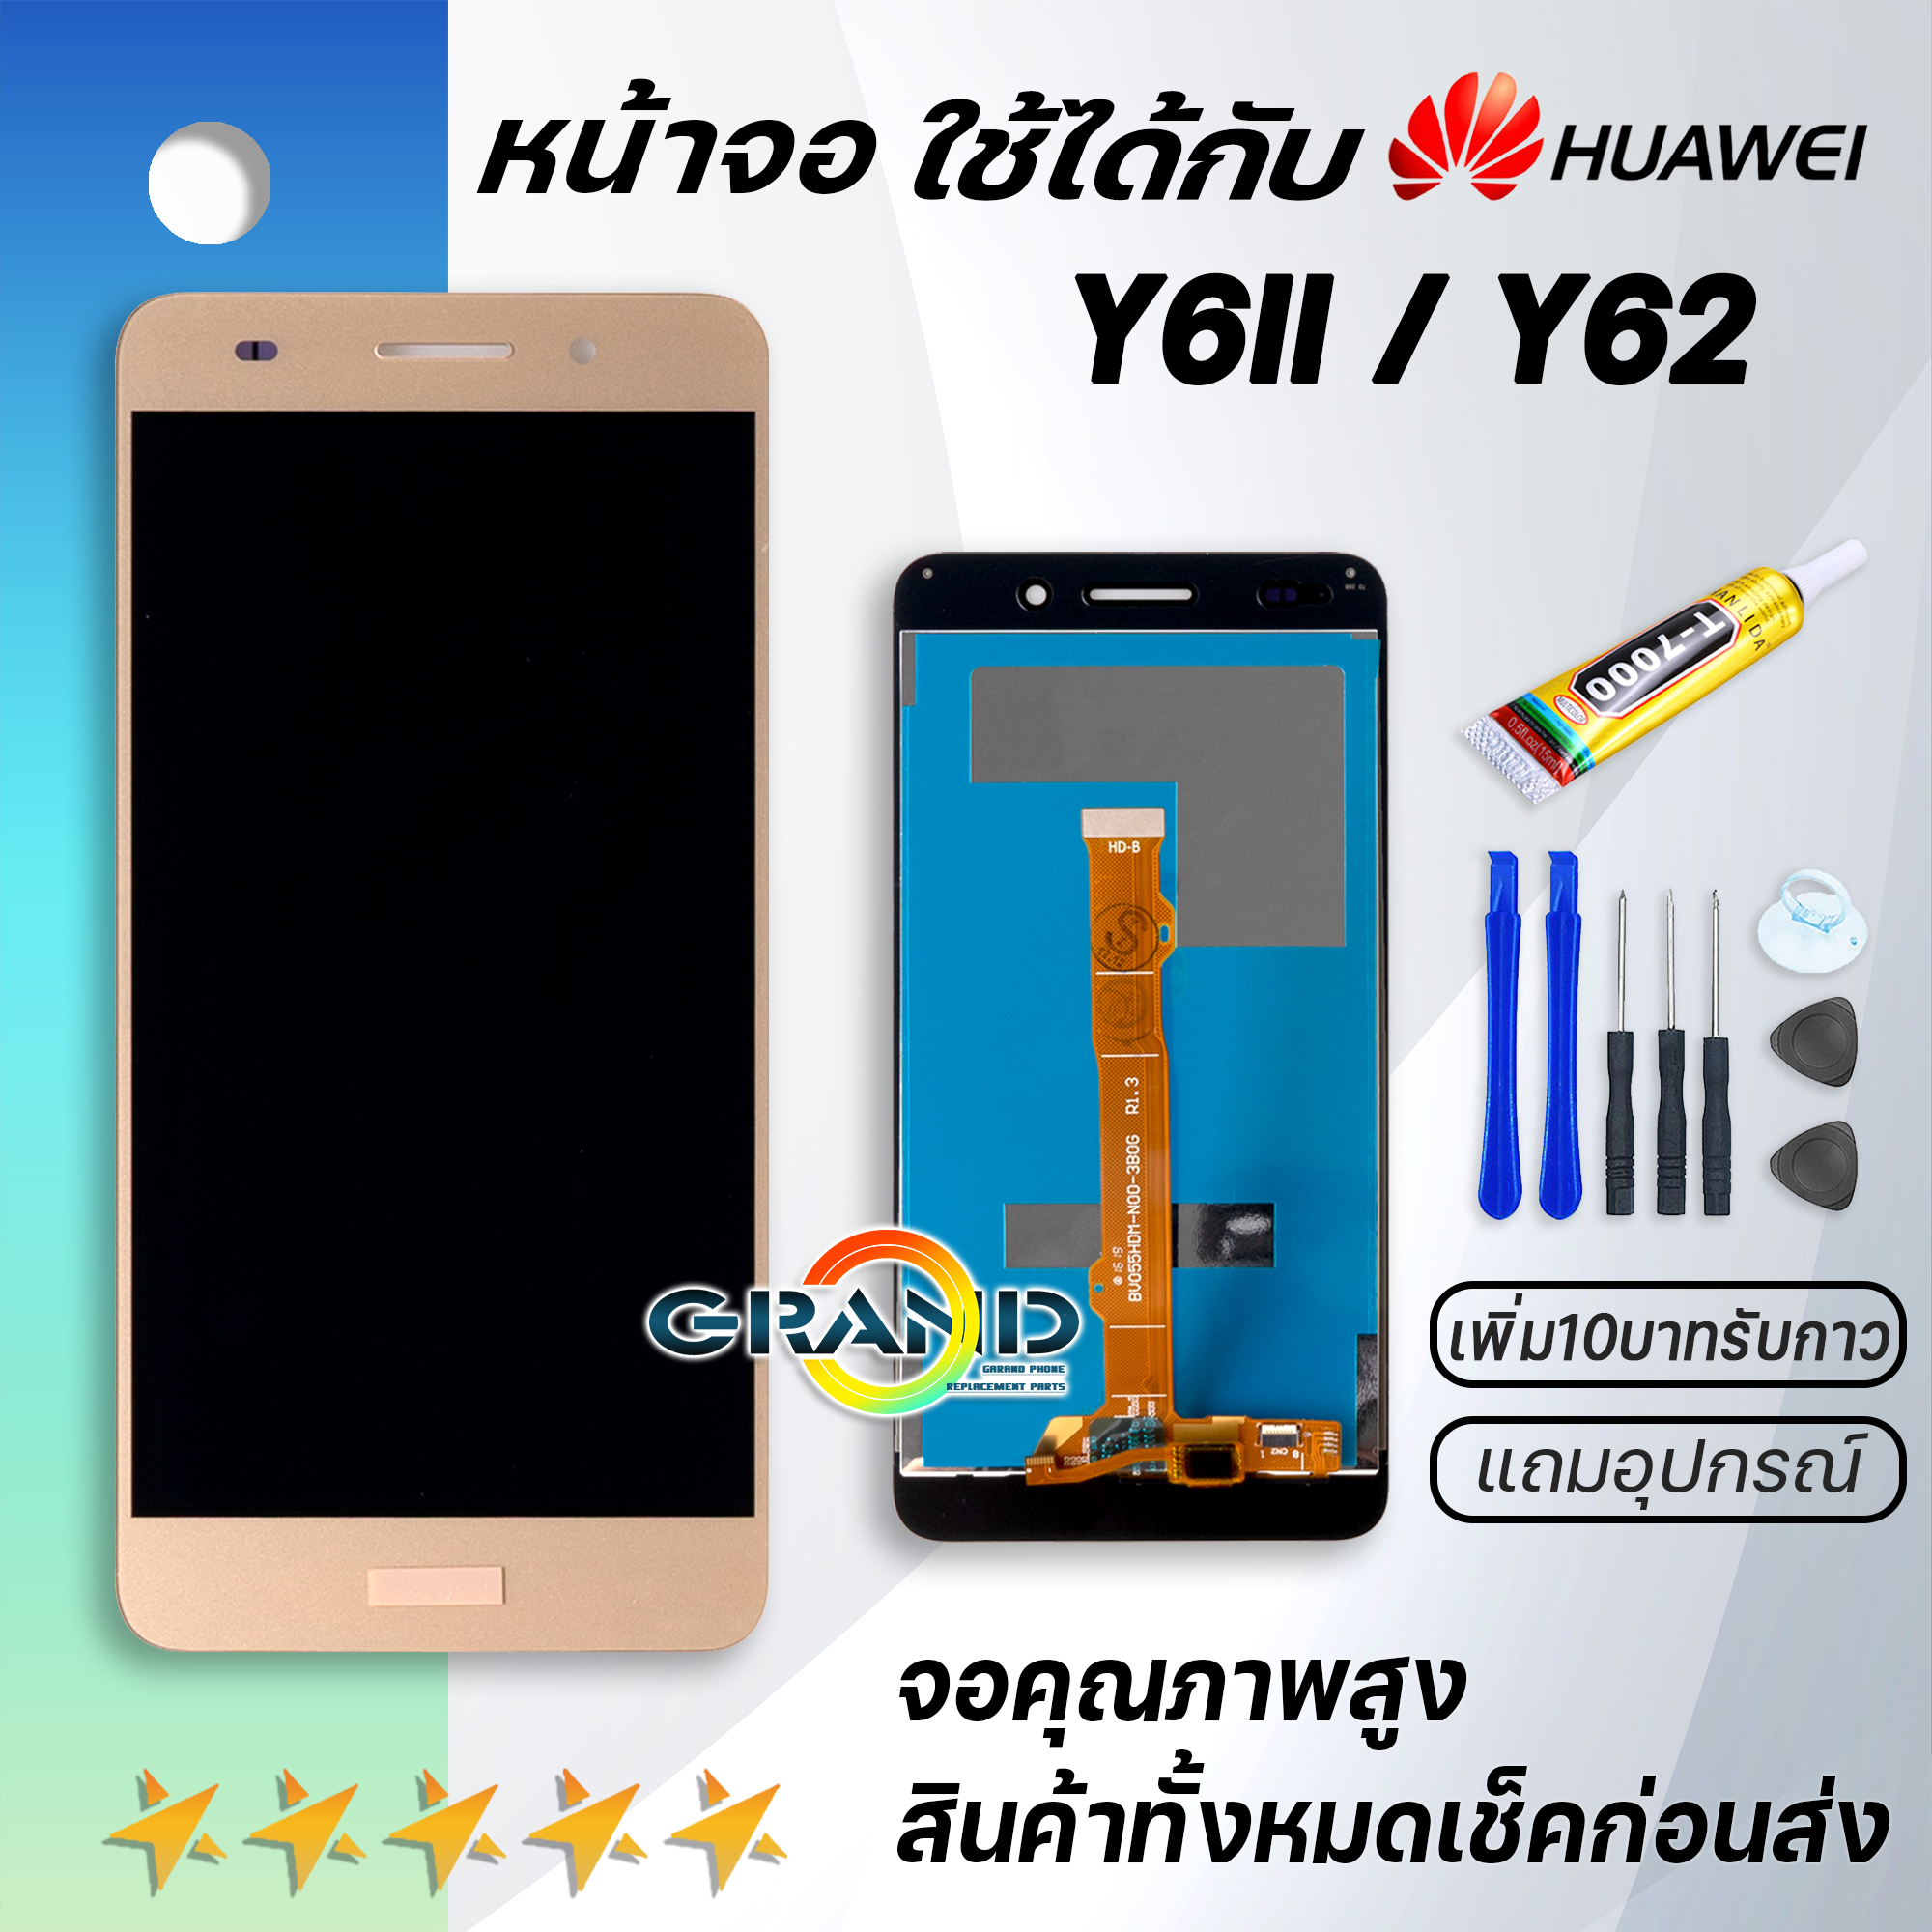 Grand Phone หน้าจอ Y62/Y6Ⅱ/Y6ii หน้าจอ LCD พร้อมทัชสกรีน huawei Y62/Y6Ⅱ/Y6ii LCD Screen Display Touch Panel For หัวเว่ย Y6Ⅱ แถมไขควง สามารถเลือกซื้อพร้อมกาว